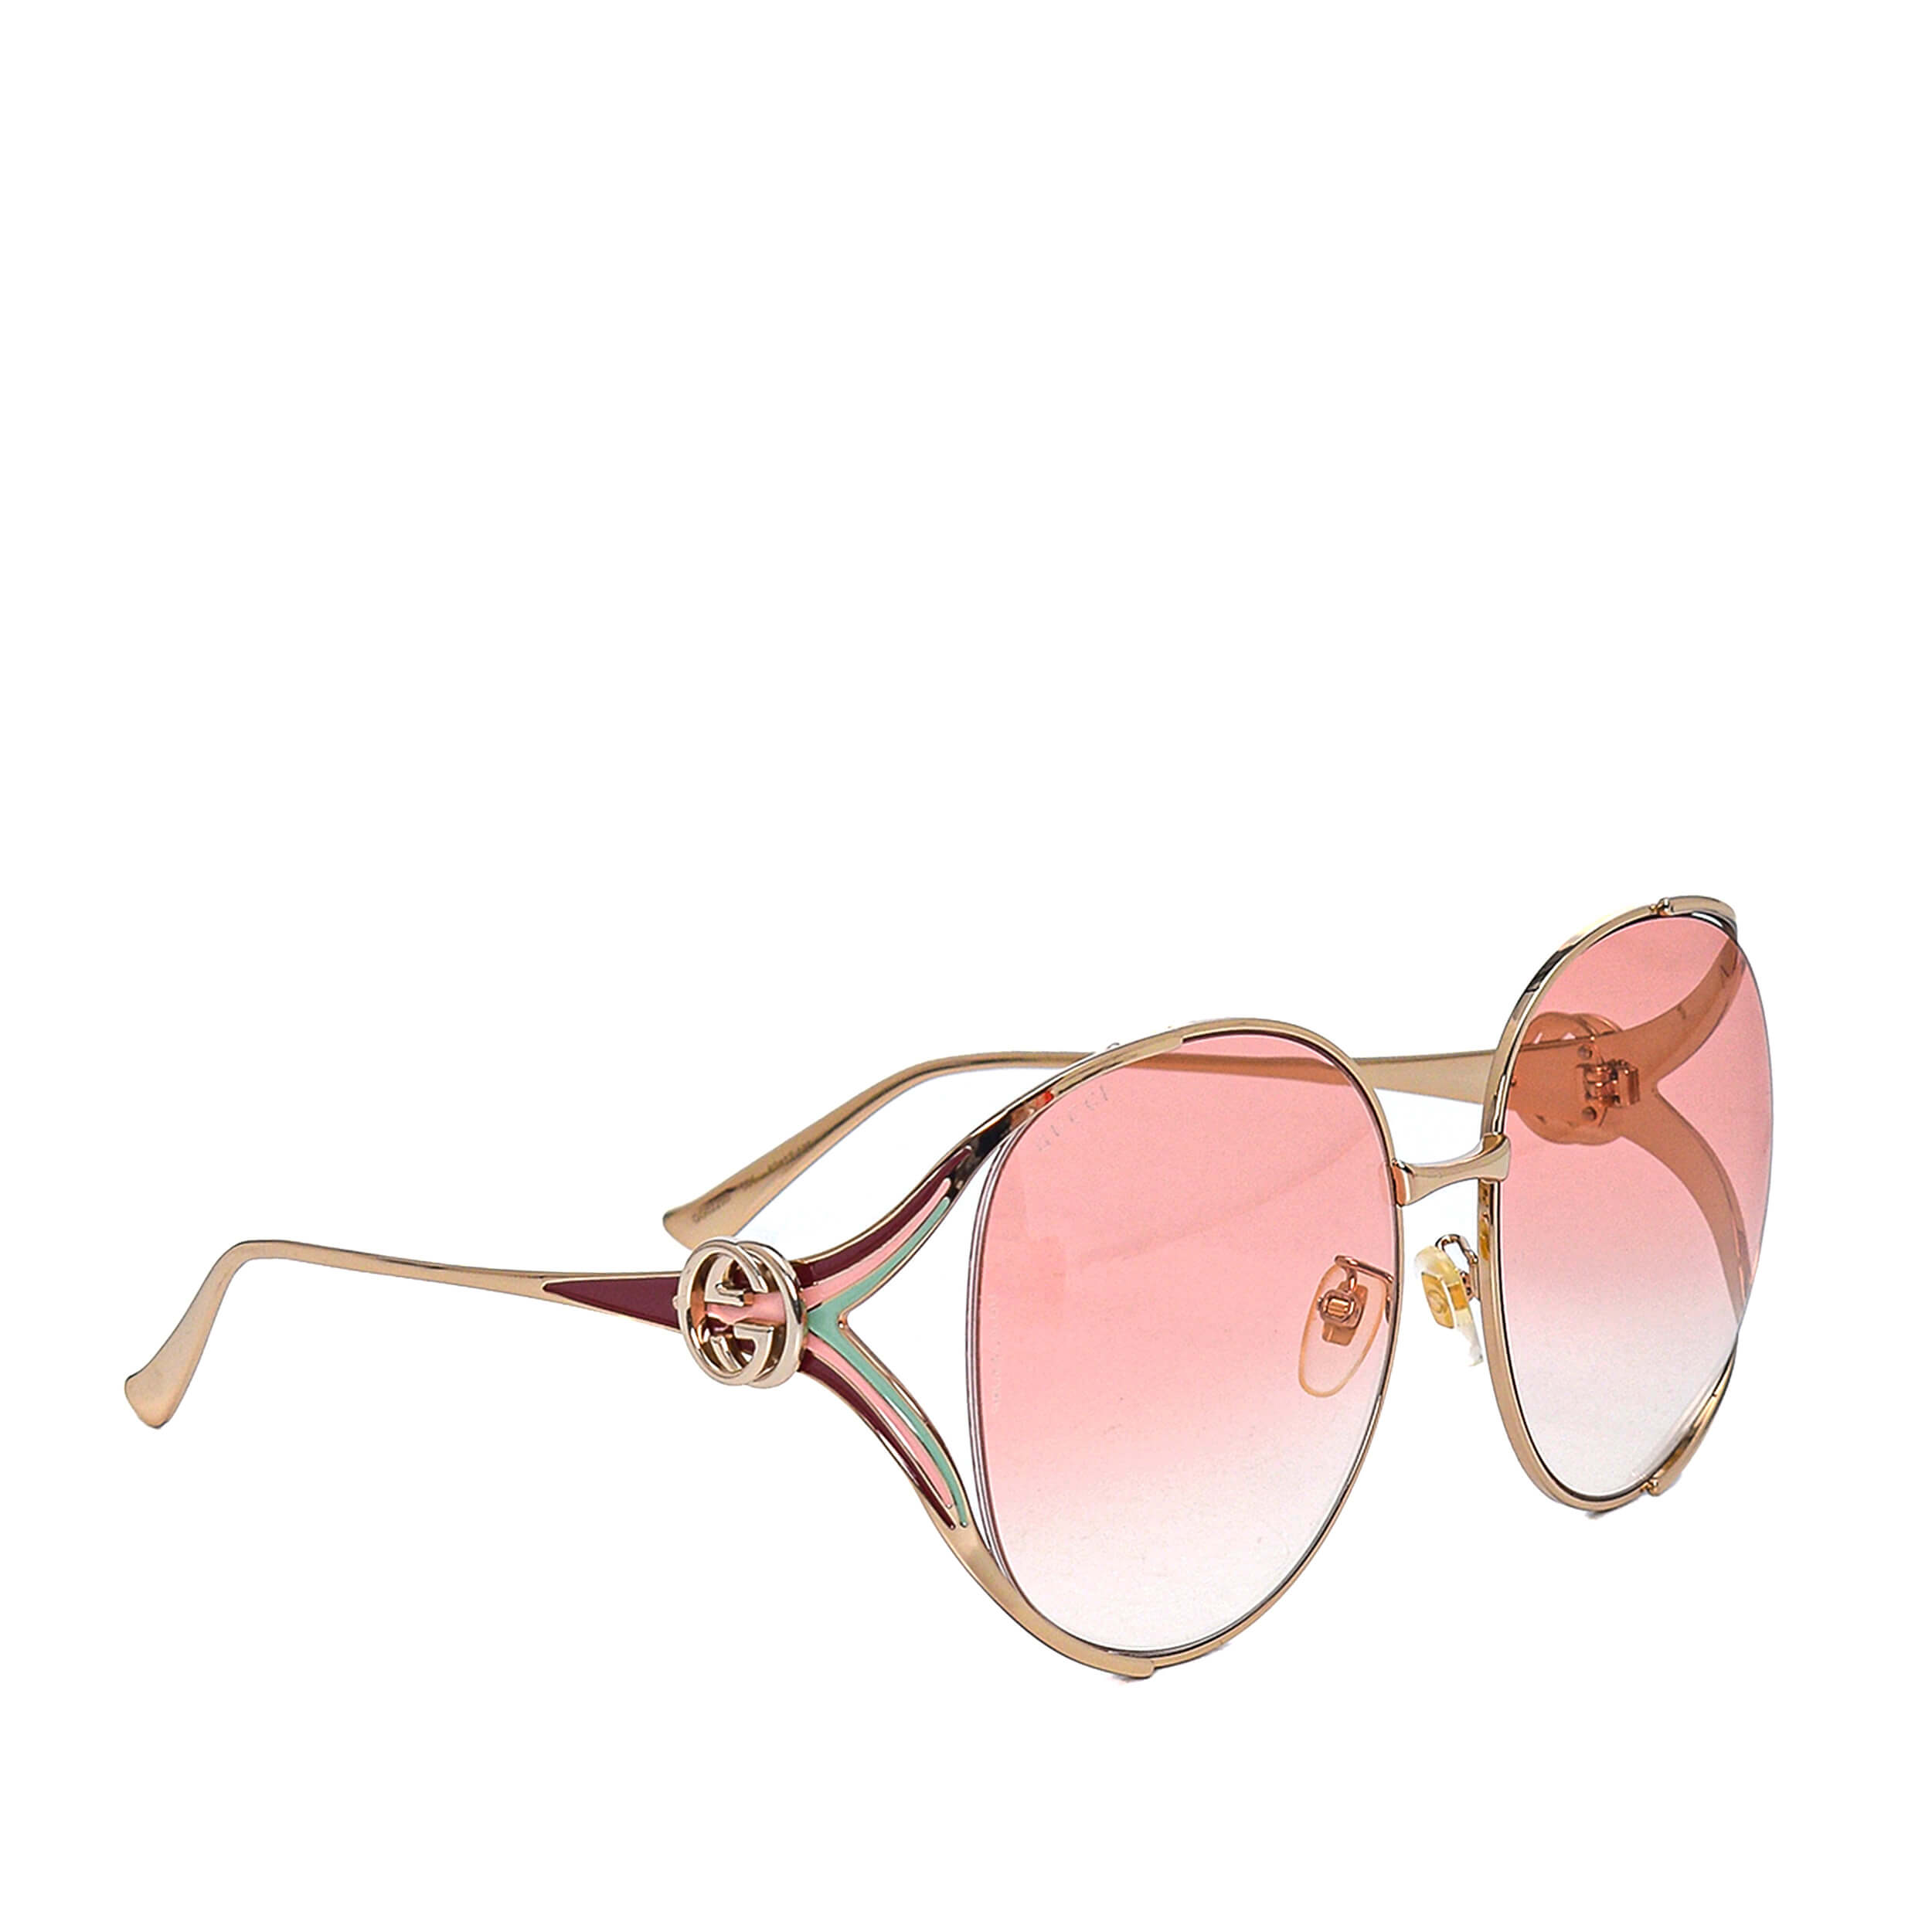 Gucci - Light Gold Tone & Pink Web Striped GG Alligator Sunglasses